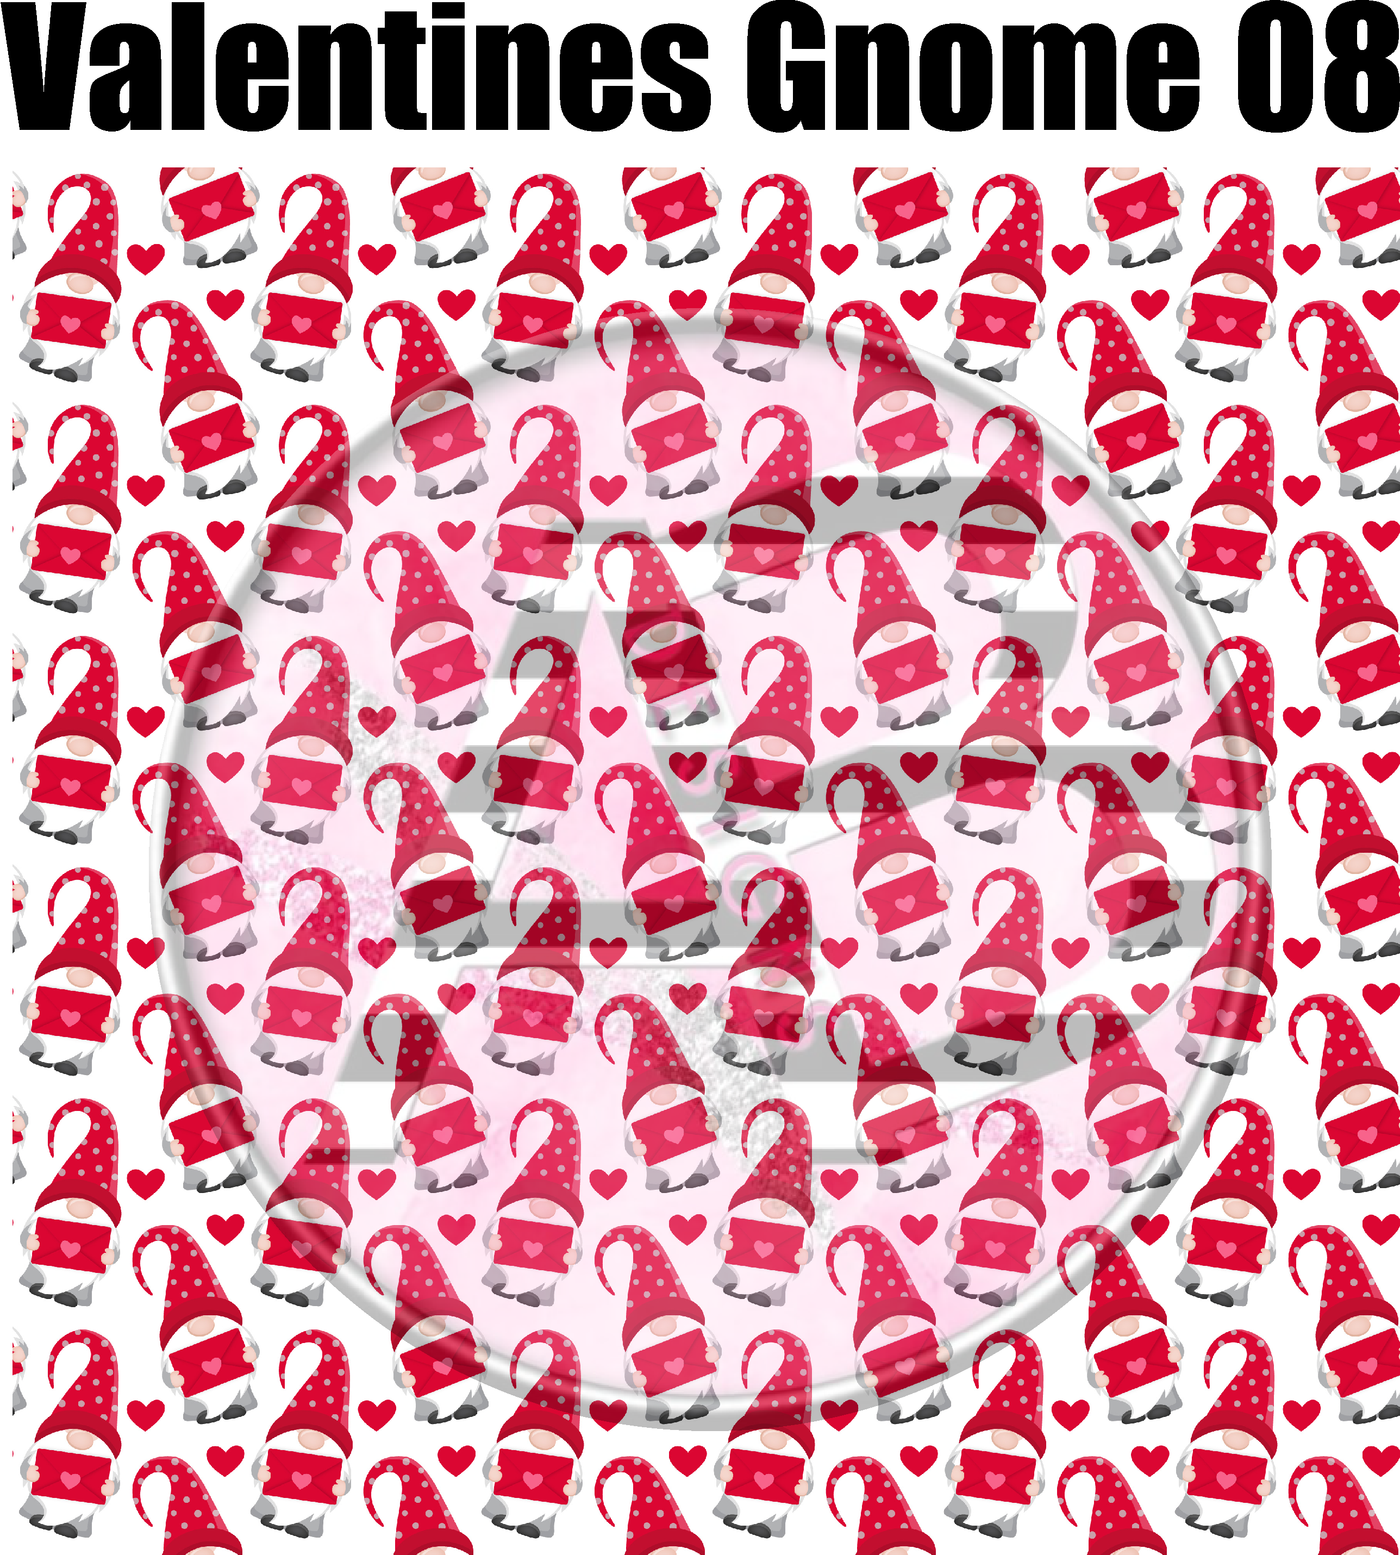 Adhesive Patterned Vinyl - Valentines Gnome 8